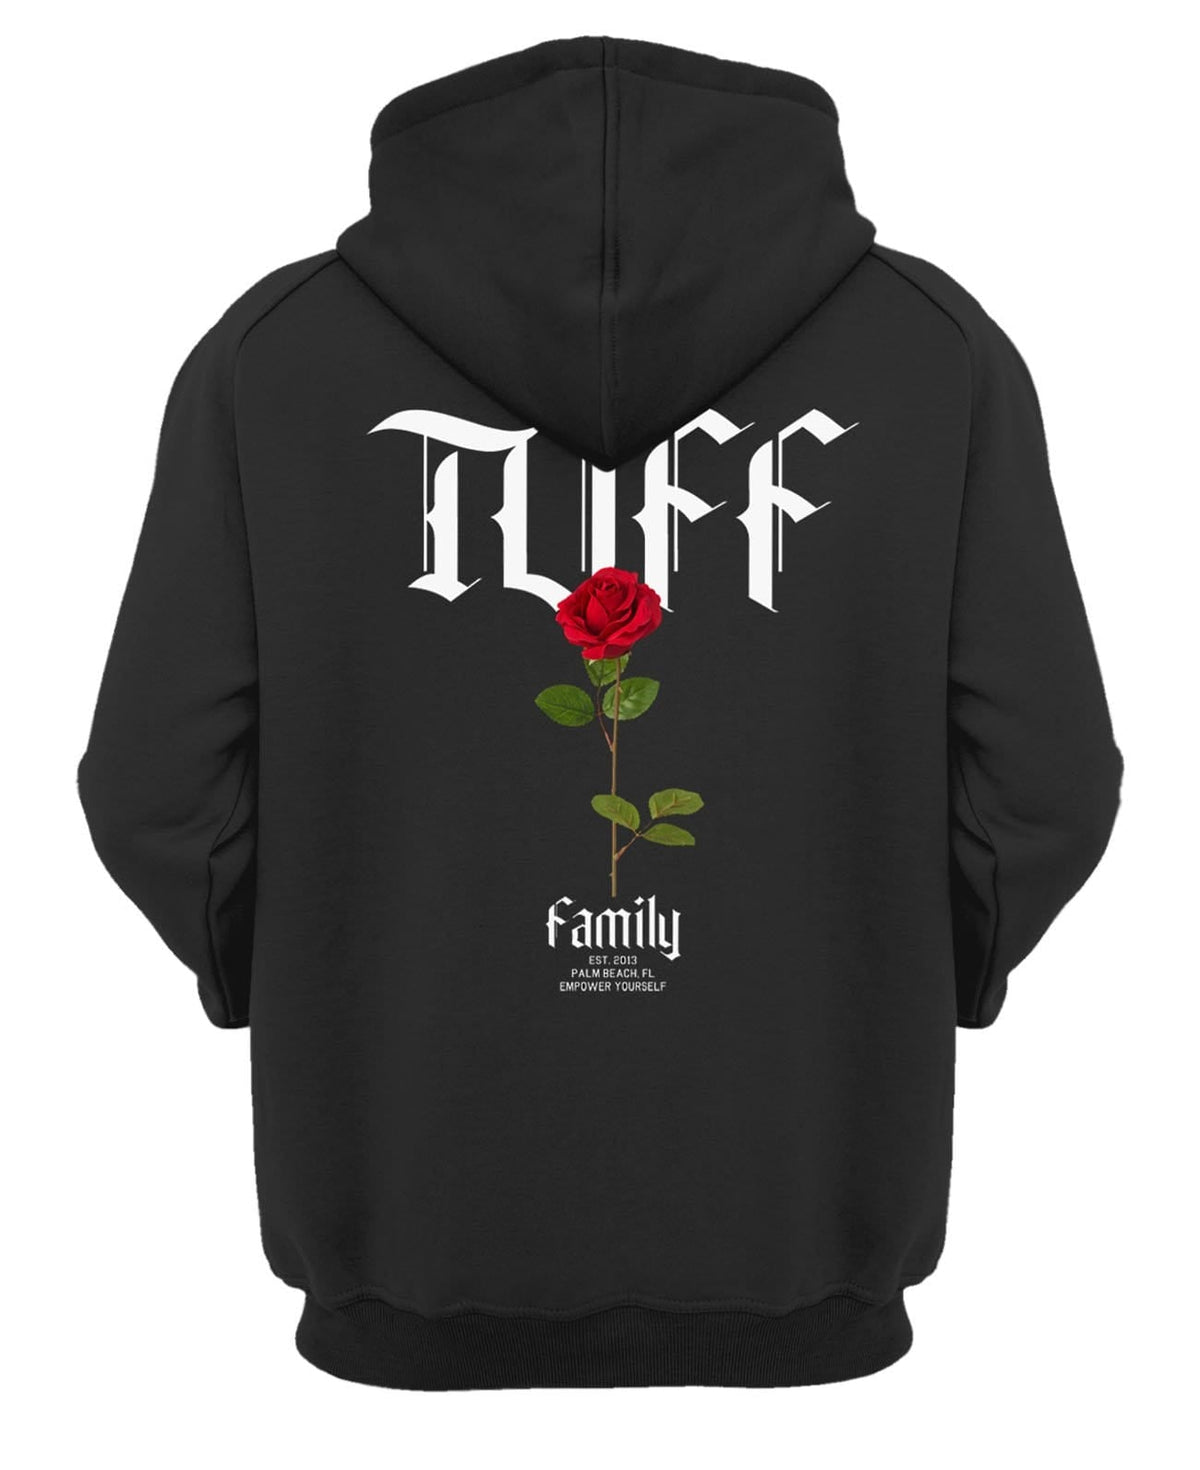 Family Foundation Hooded Sweatshirt XS / Black TuffWraps.com